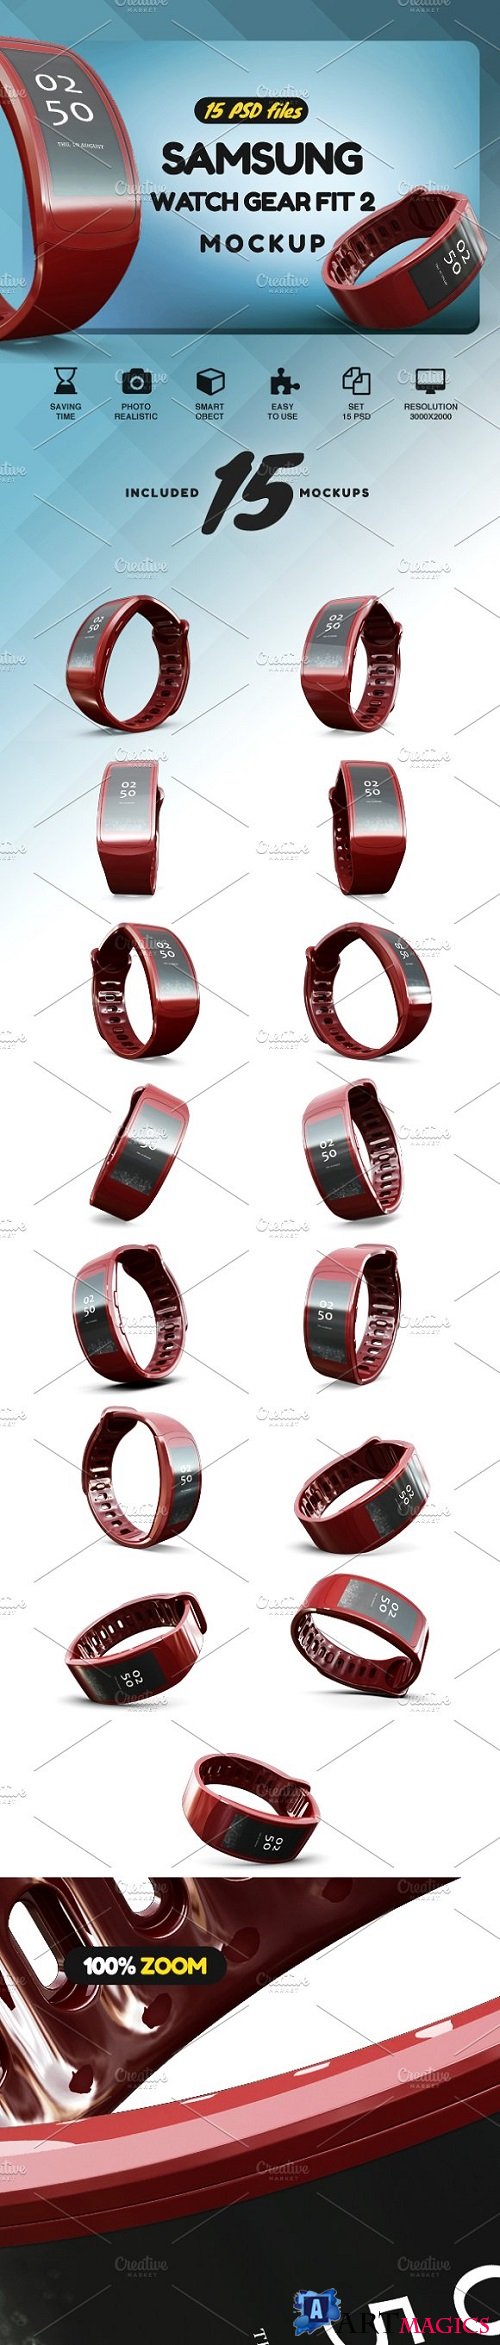 Samsung Watch Gear Fit 2 Mockup - 2020015